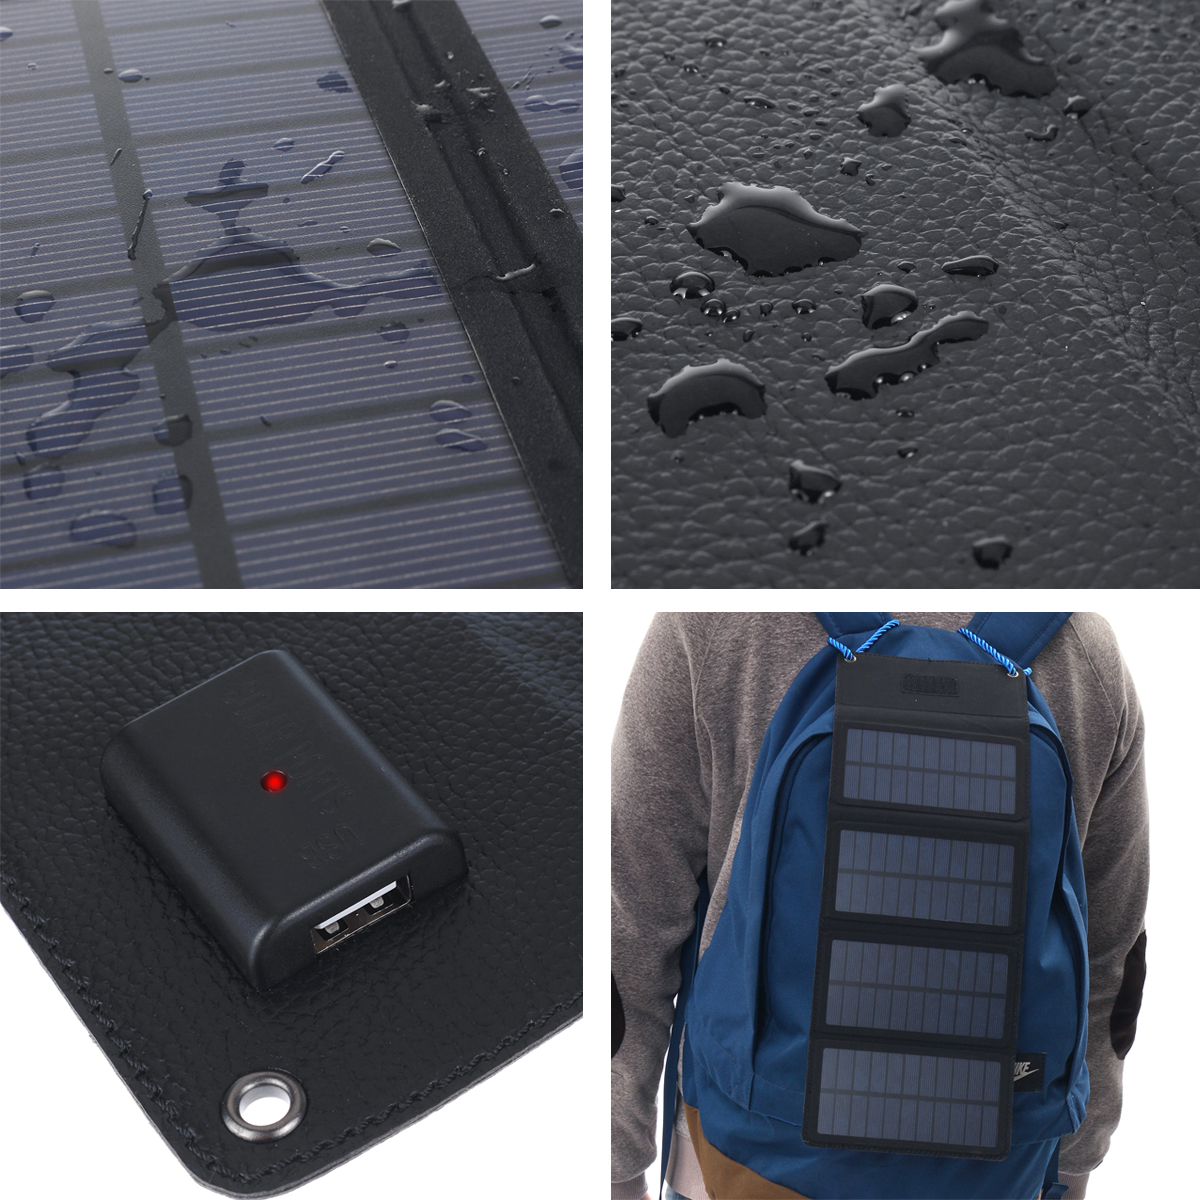 7W 5V Waterproof Foldable Mono-crystalline Silicon Solar Panel With LED Charging indicator & USB Interface 28